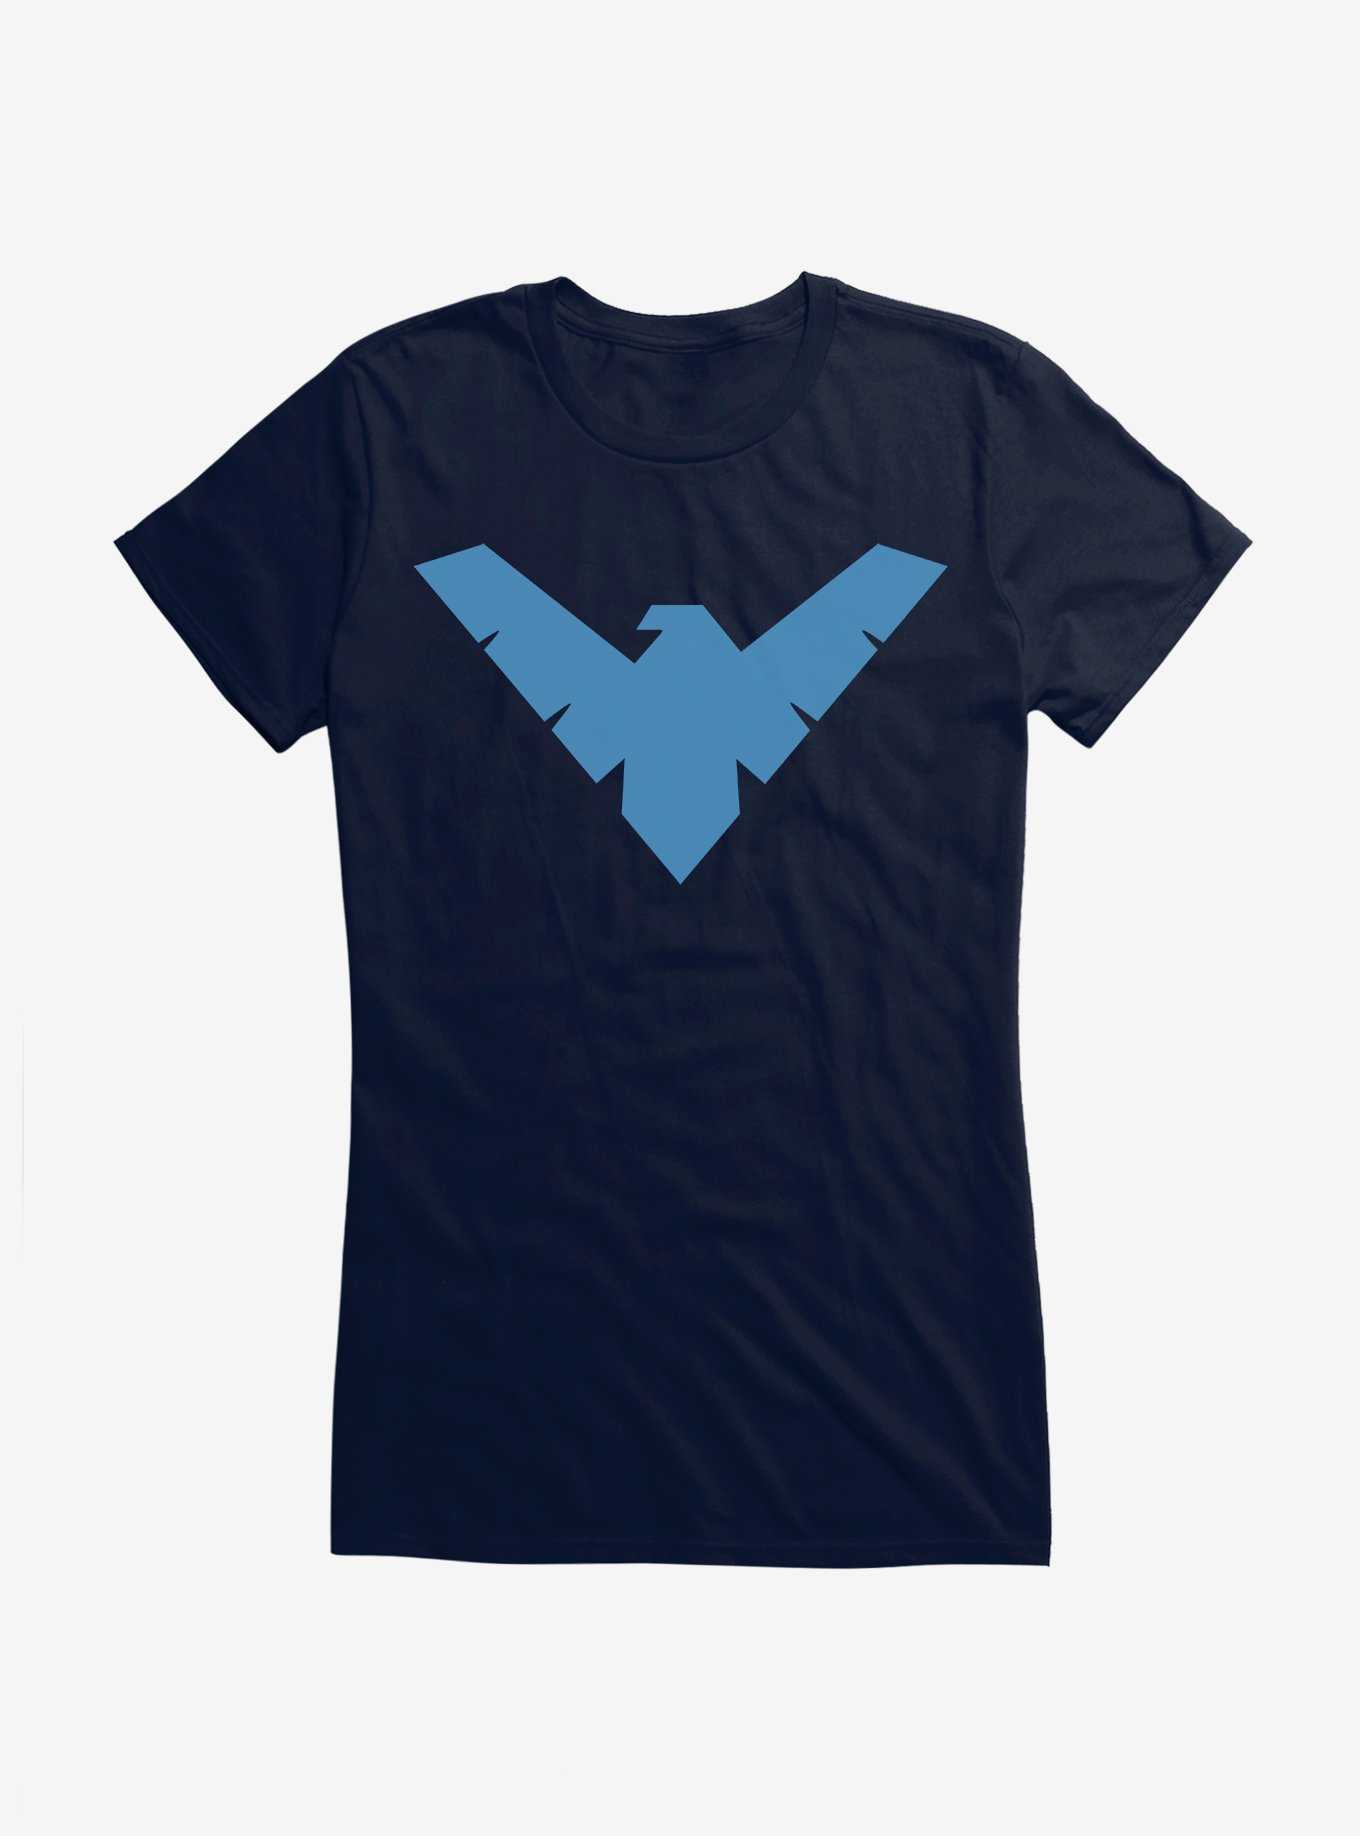 DC Comics Batman Nightwing Logo Girls T-Shirt, , hi-res